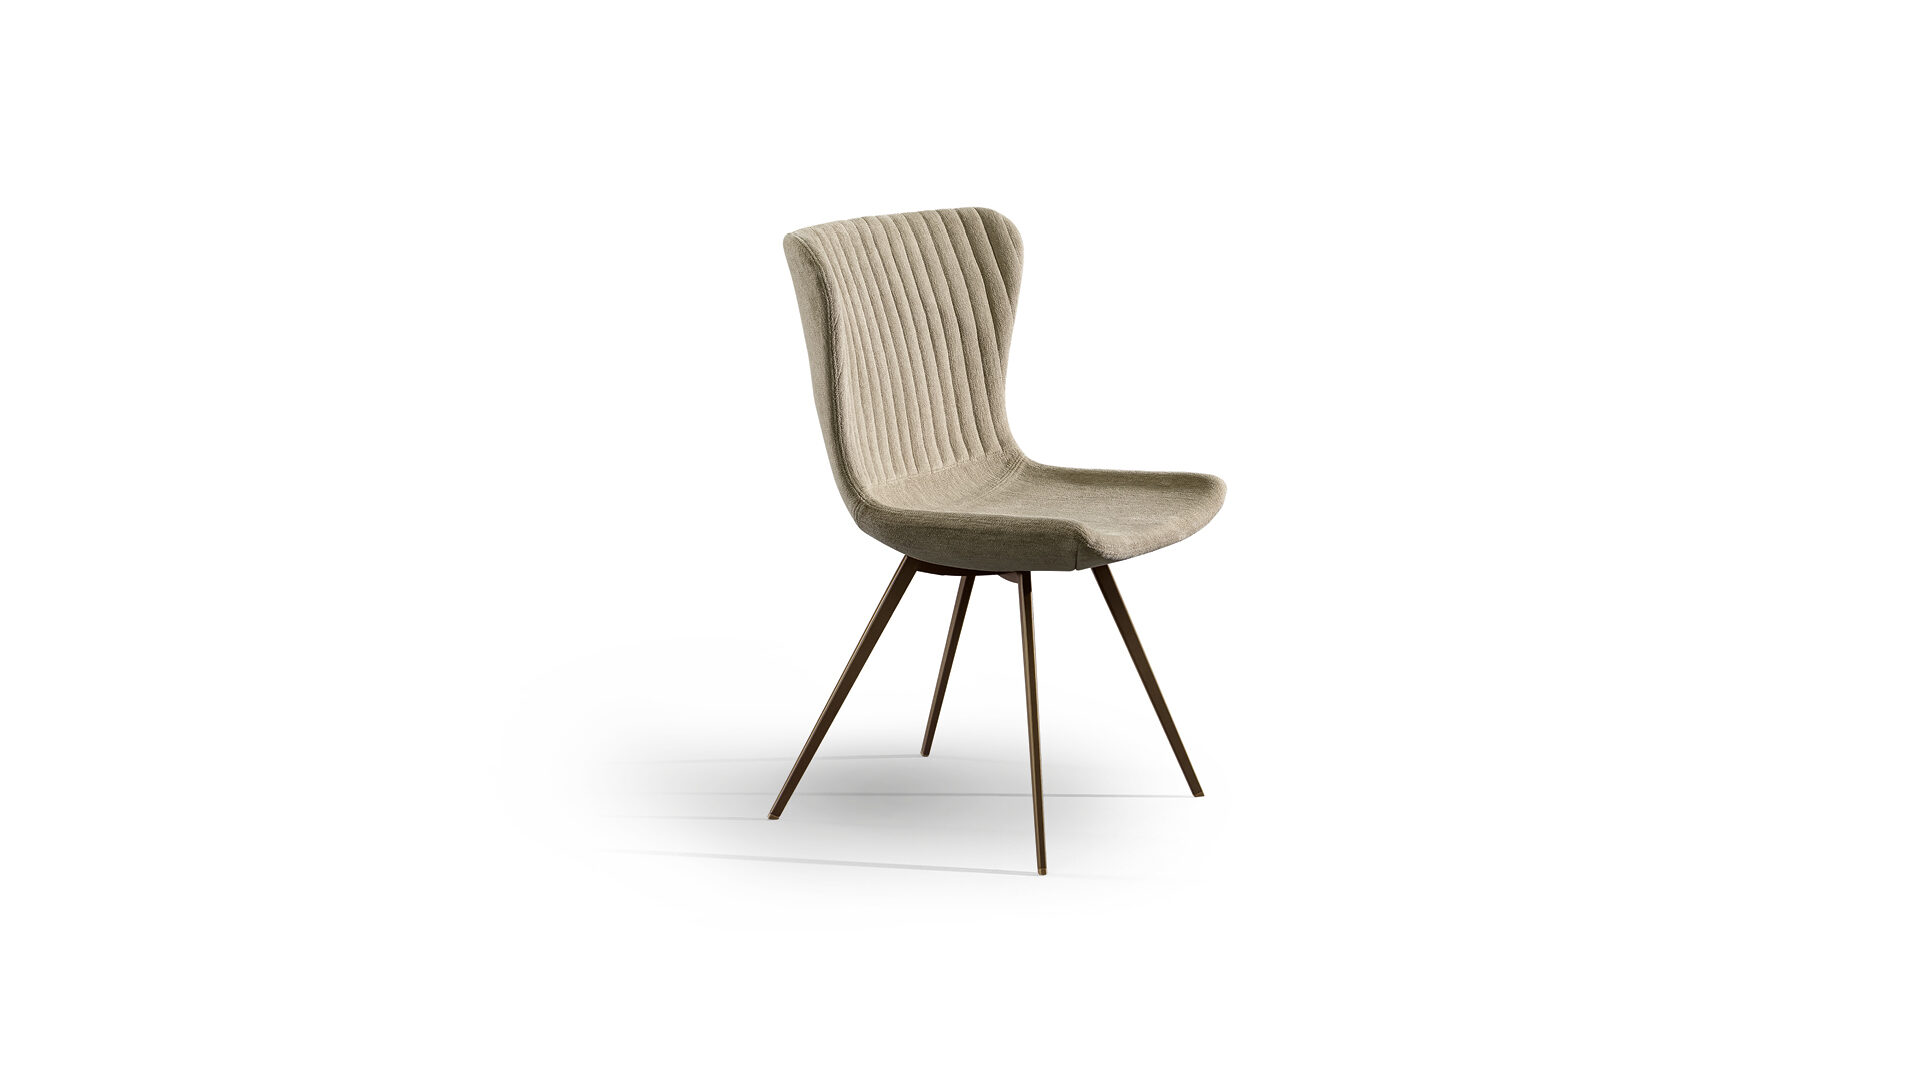 bonaldo-sedie-colibri-chair-main-slider-01-1920x1080-jpg